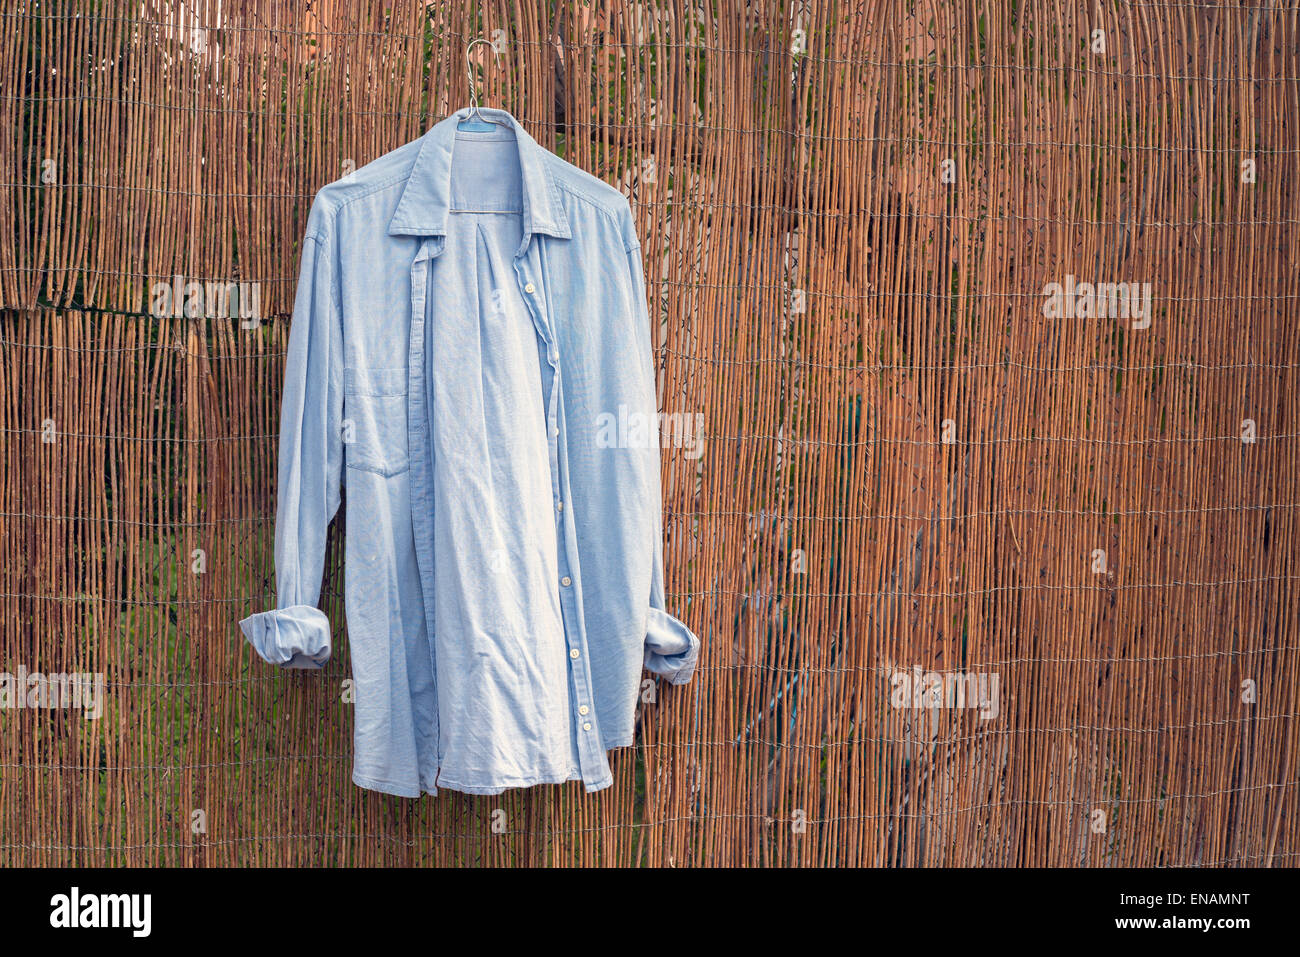 Blue shirt hanging on wicker wall Stock Photo